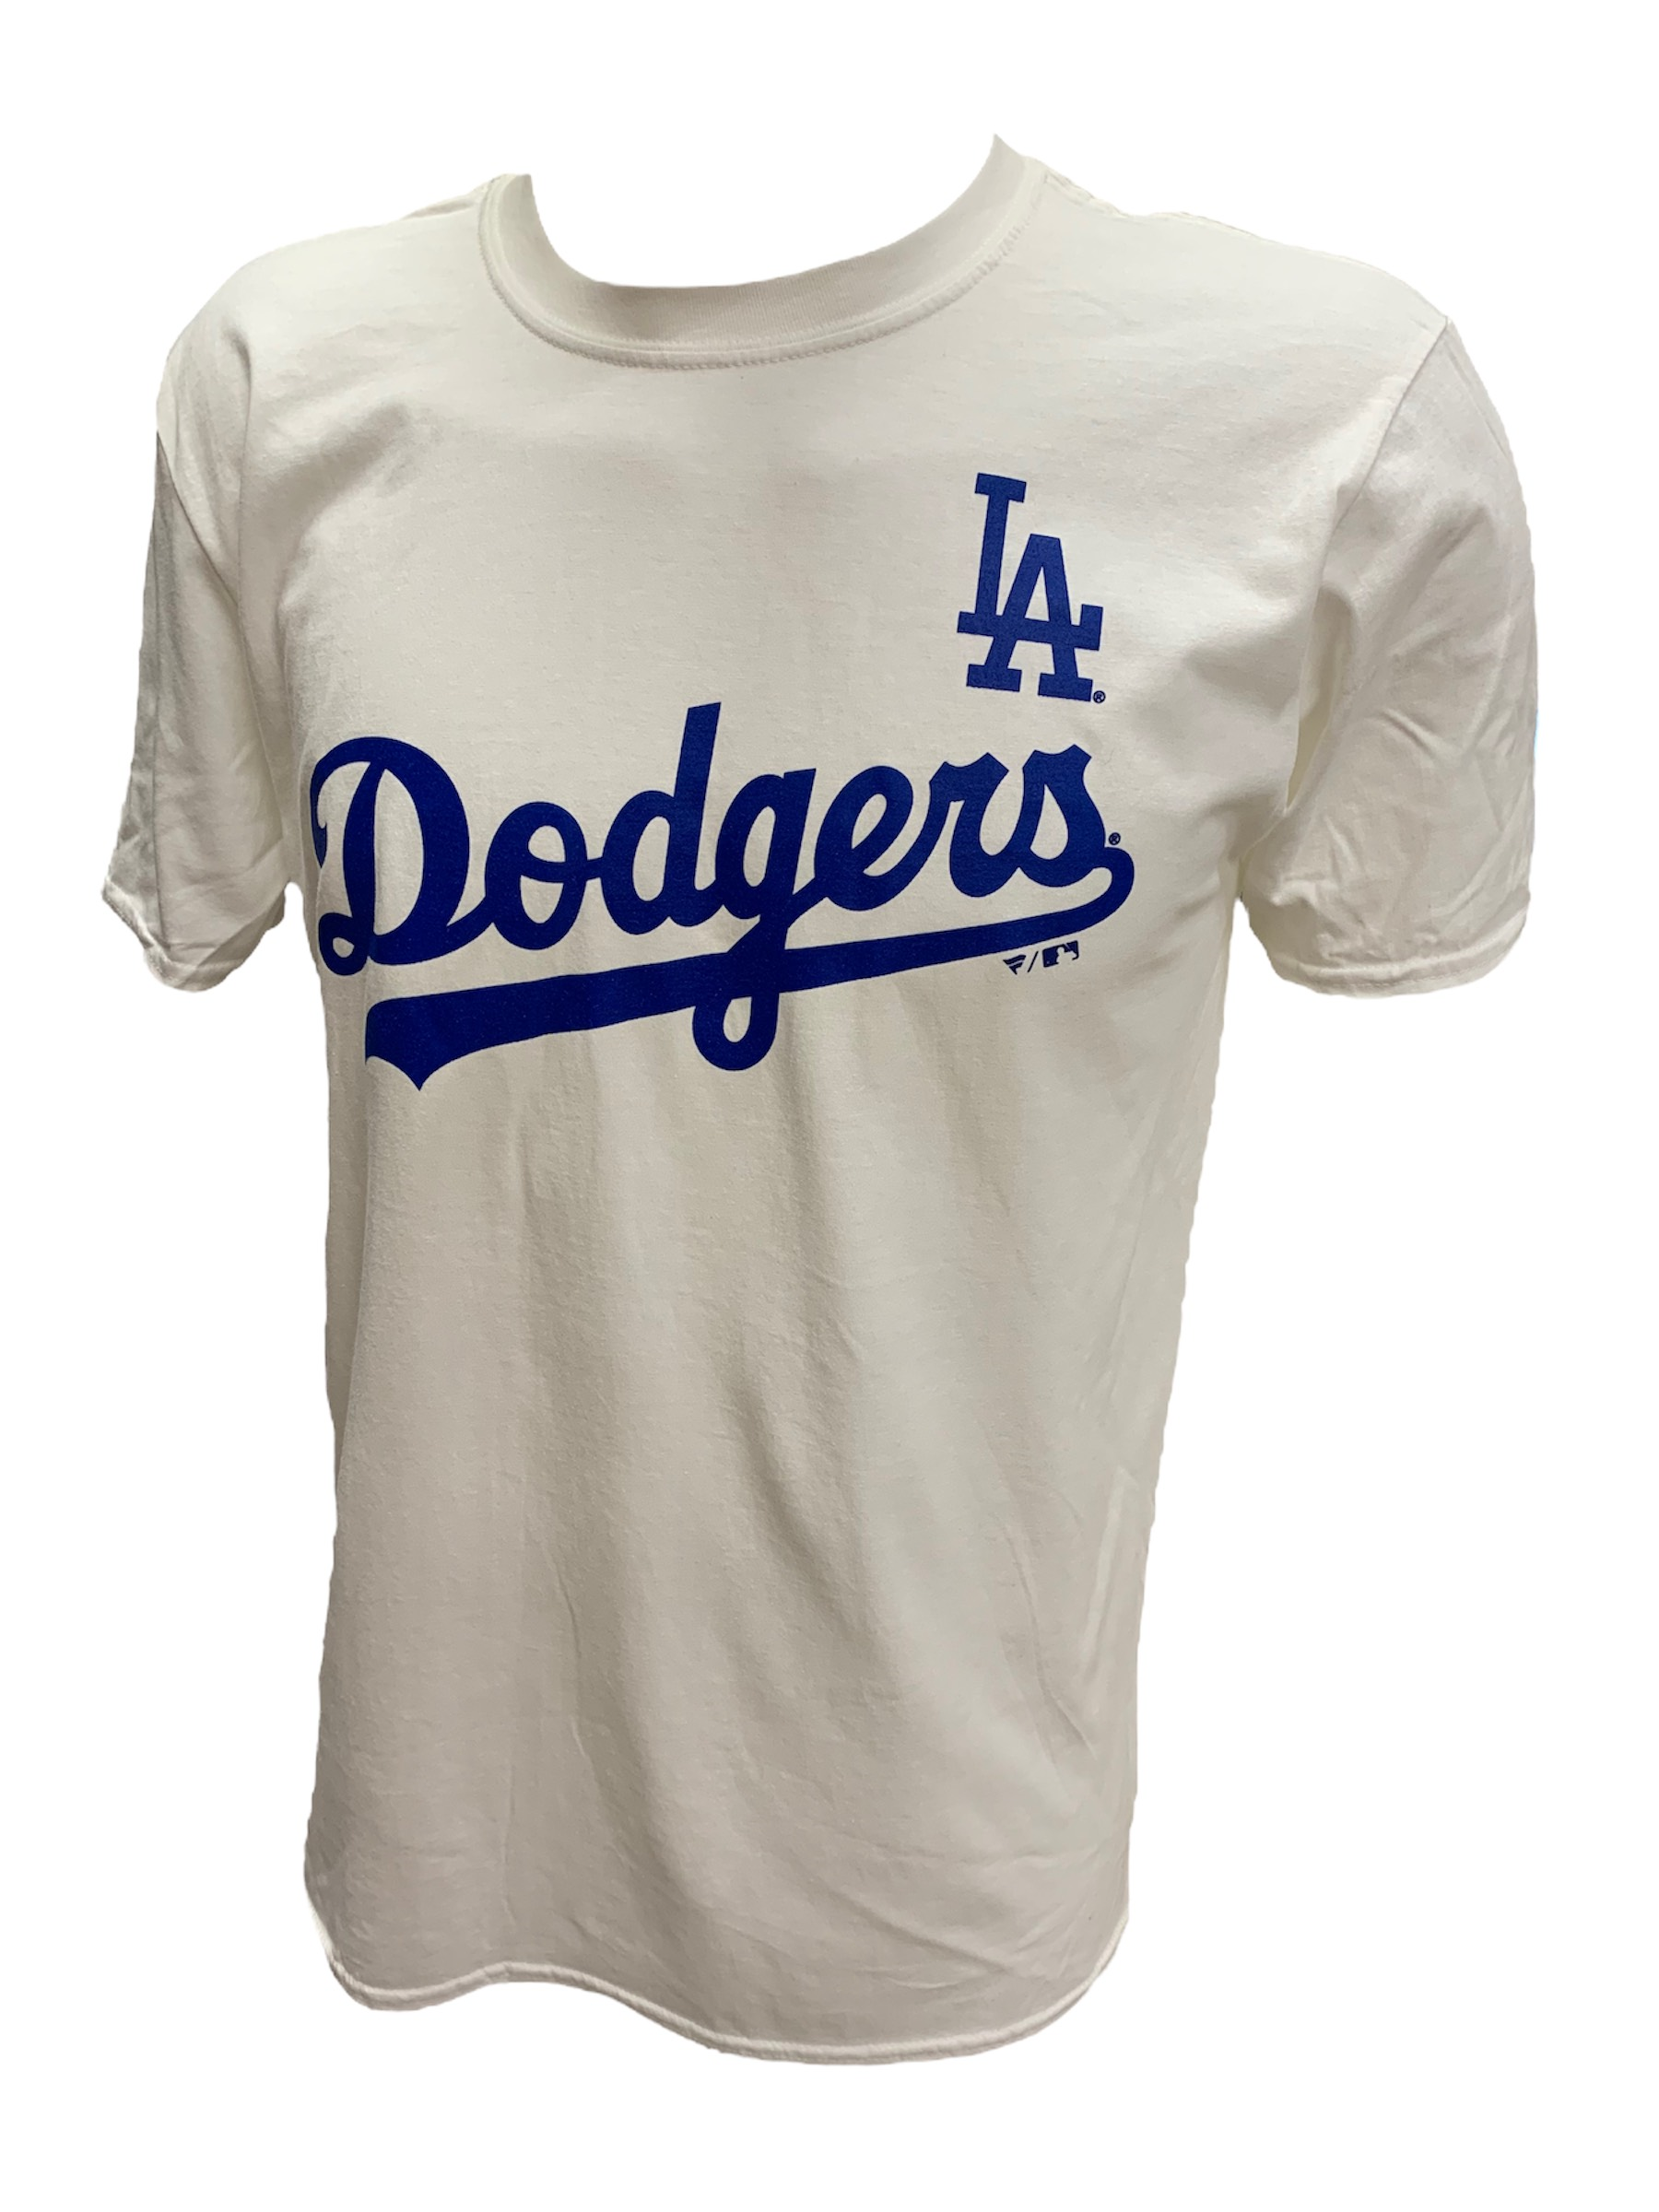 L.A. Dodgers Kids T-Shirt, Kids Dodgers Shirts, Dodgers Baseball Shirts,  Tees